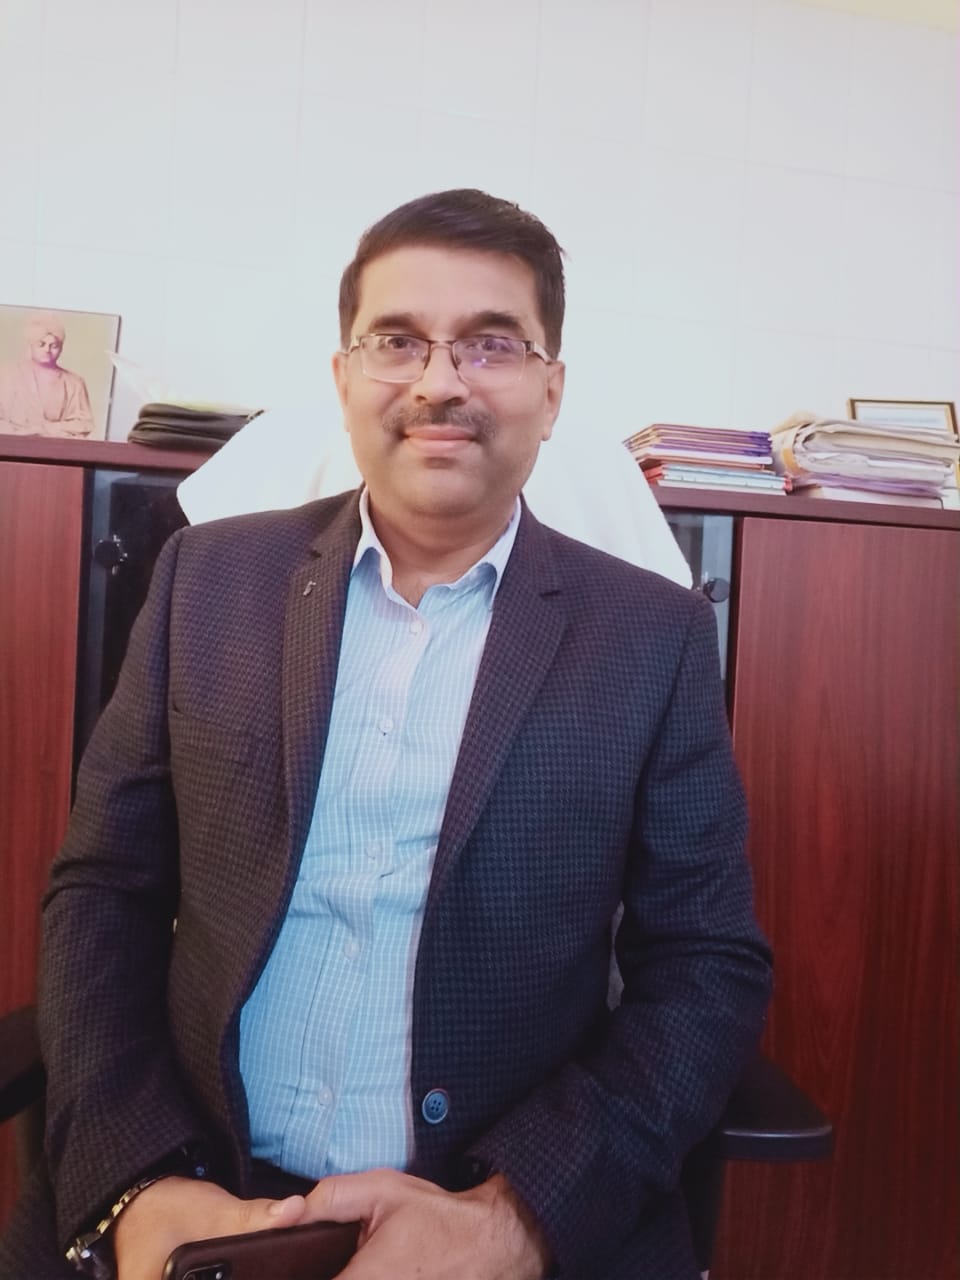 Dr. Manish Kumar Shukla